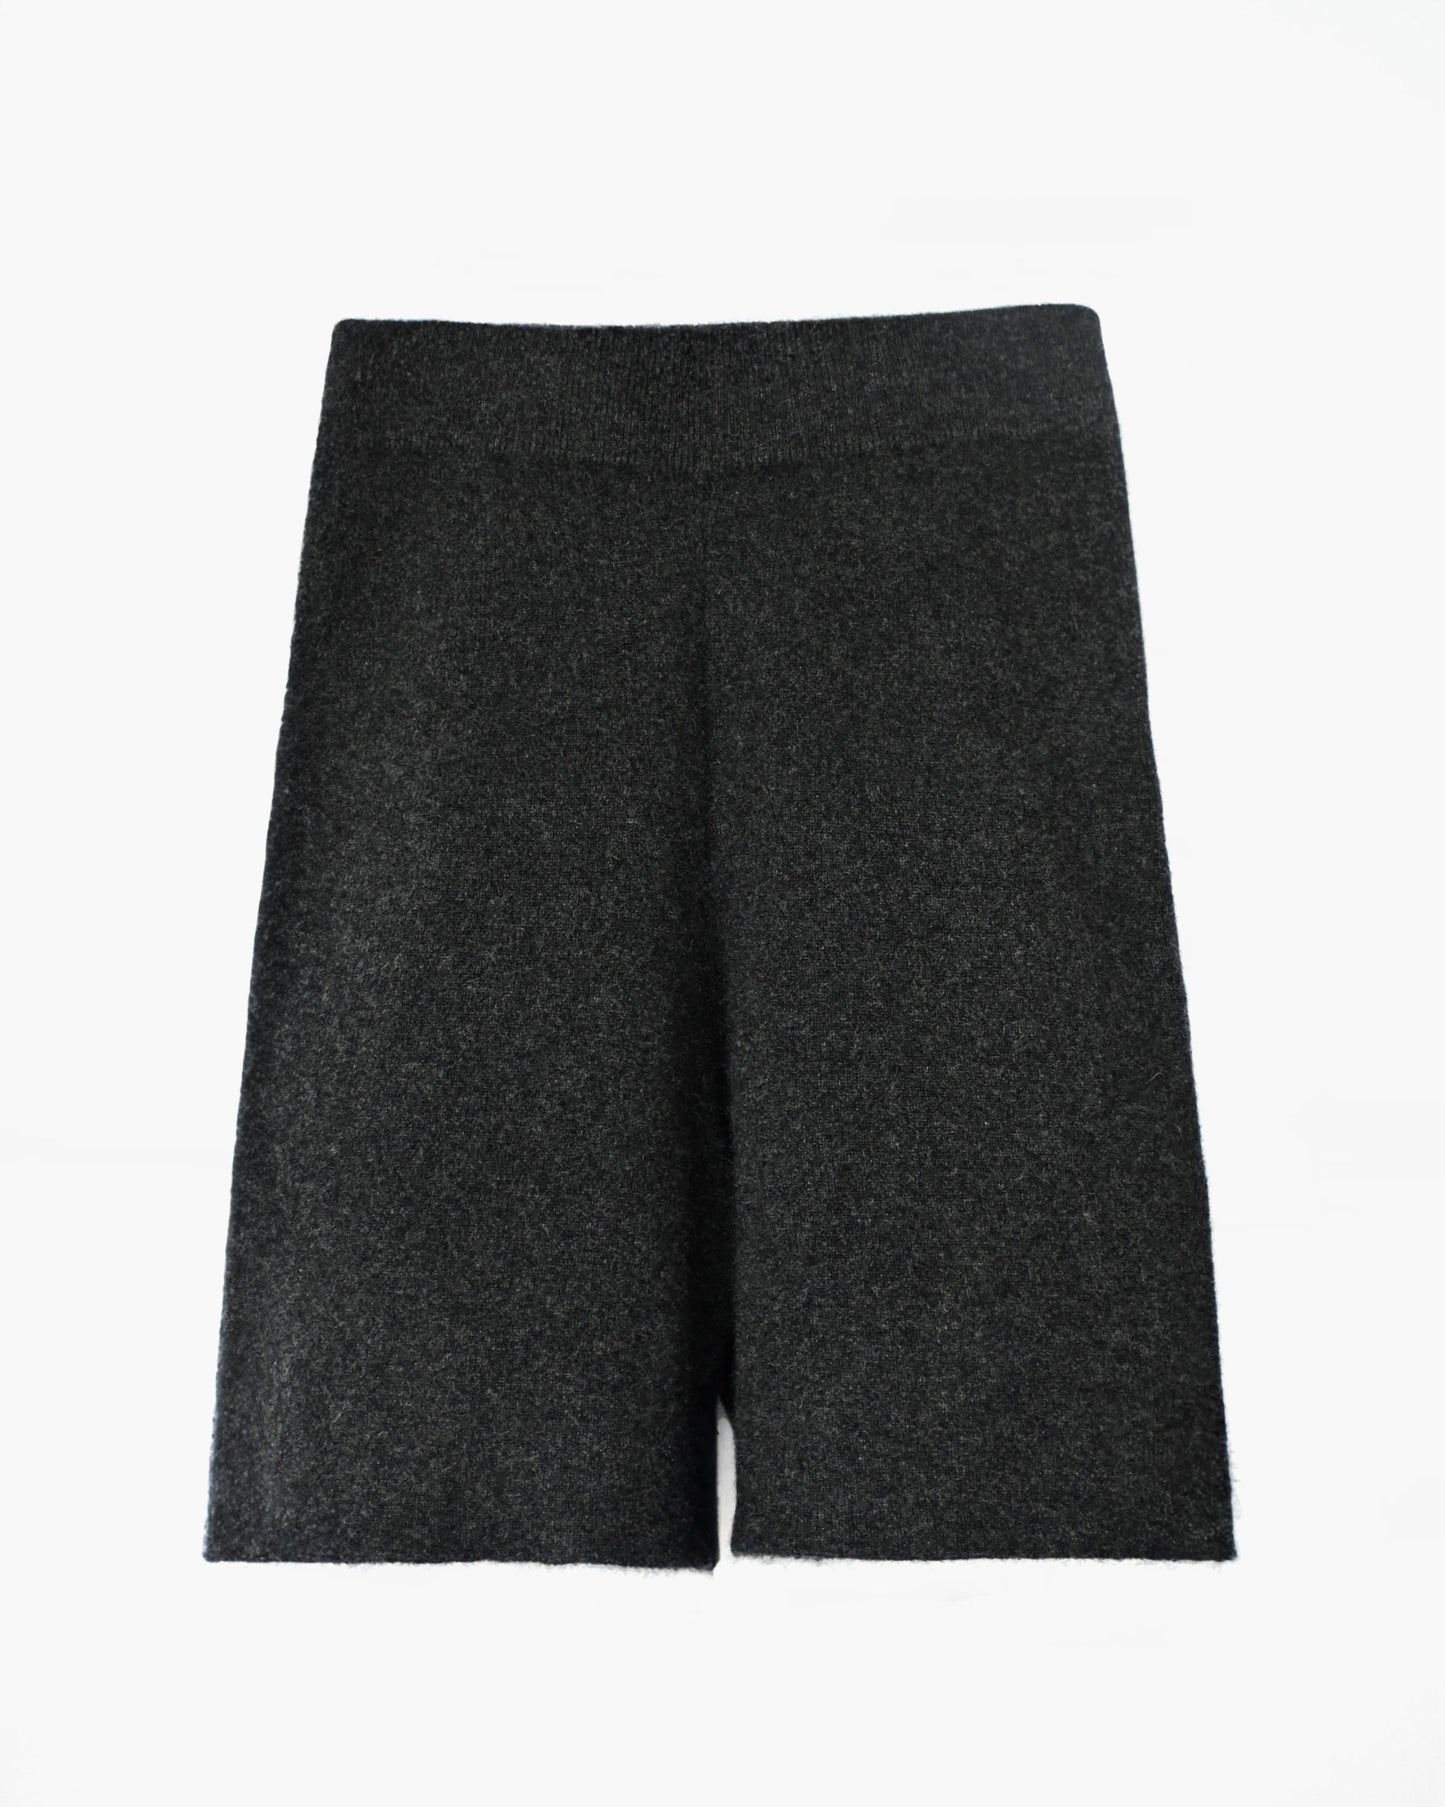 404 Cashmere Rib Shorts - Charcoal